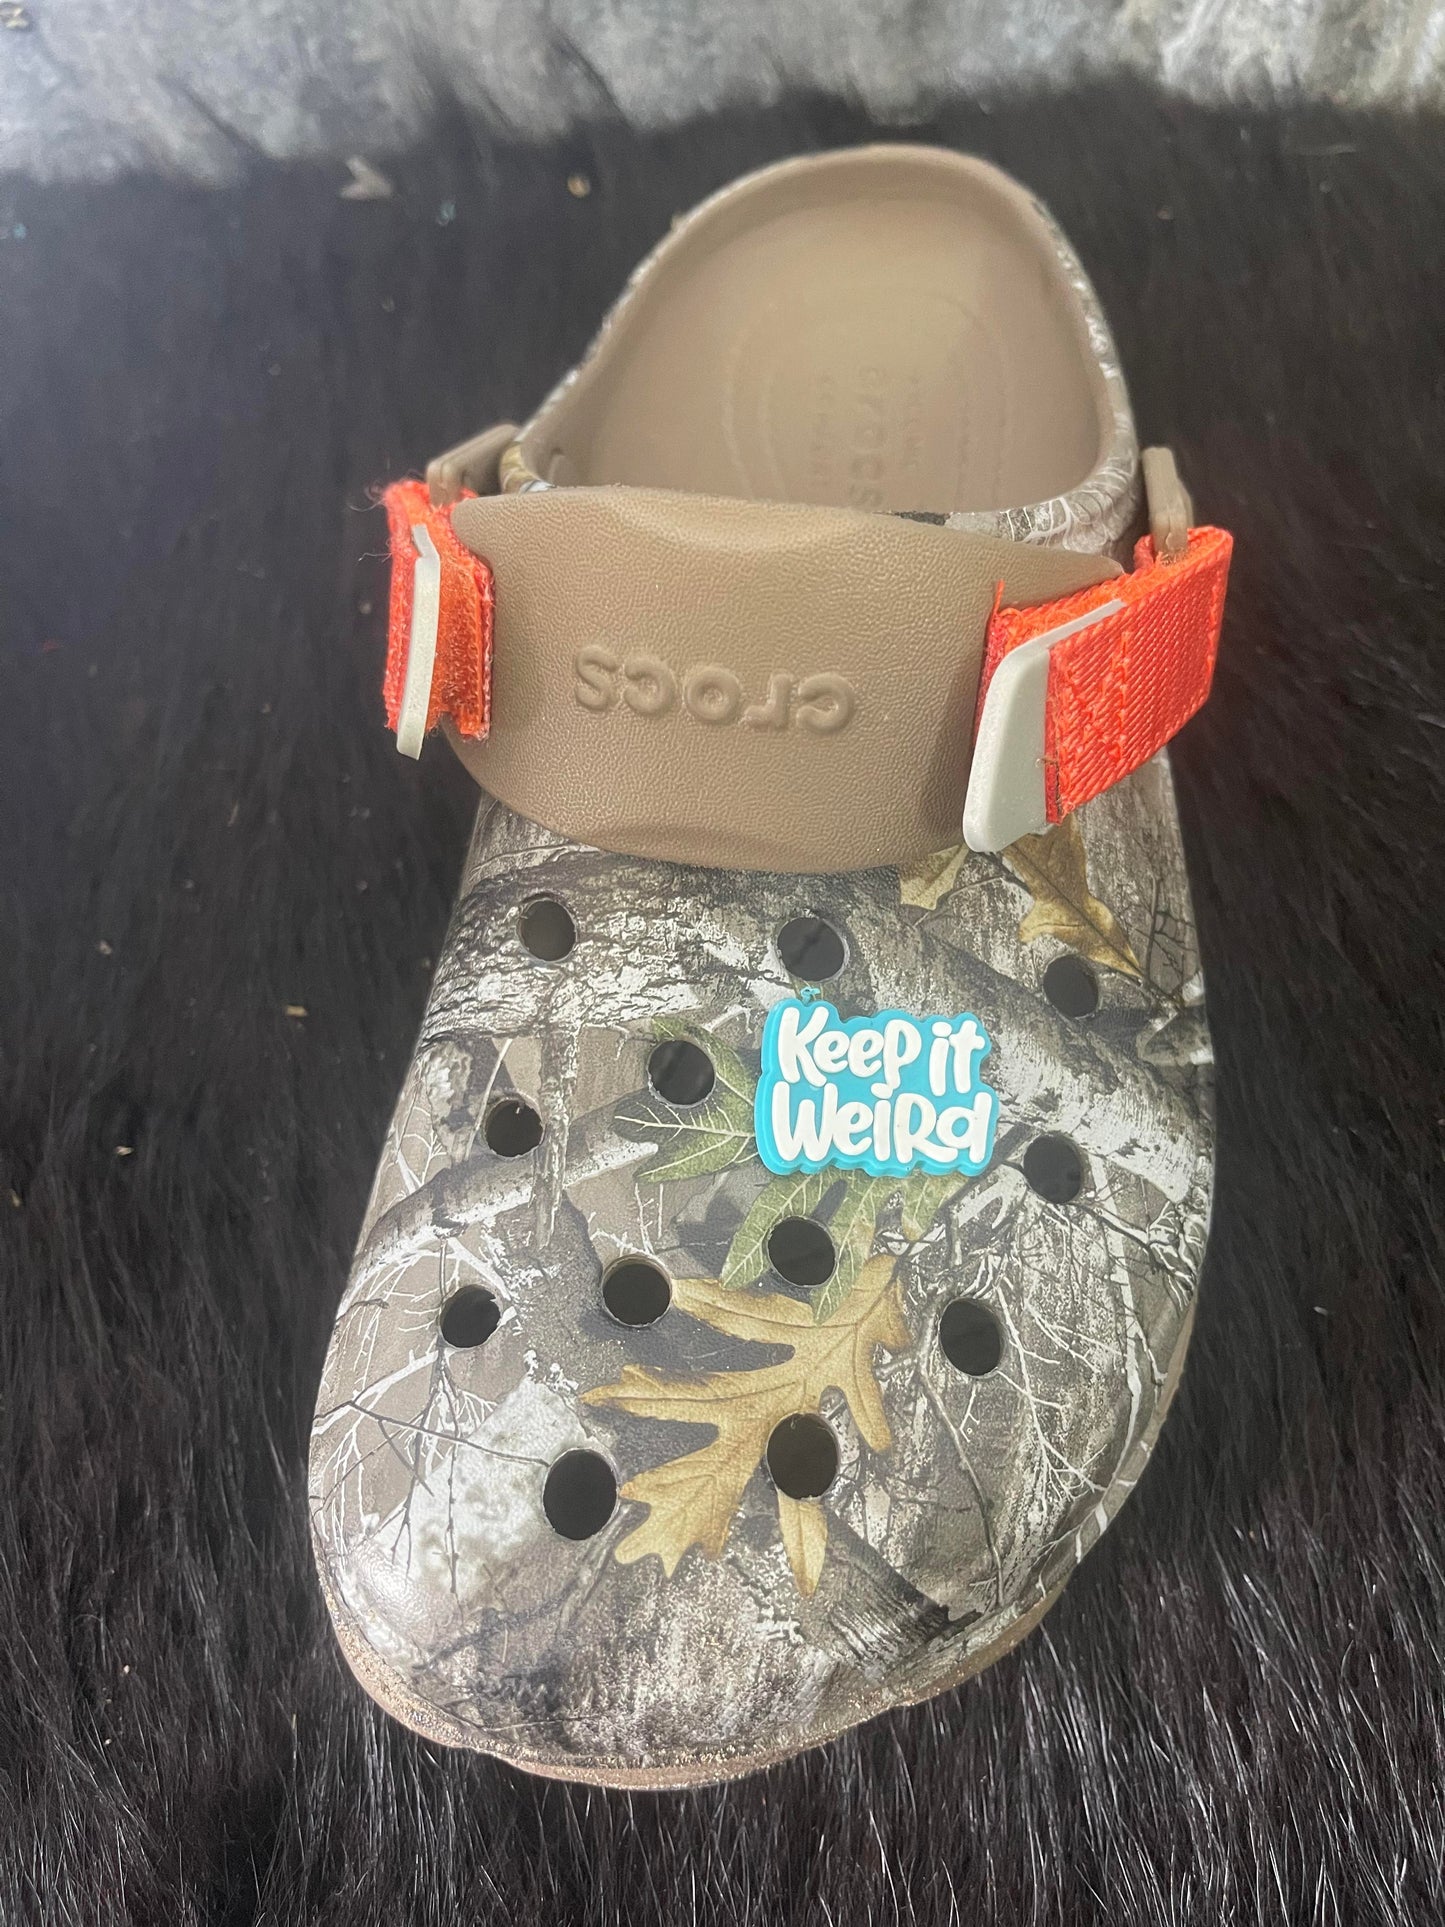 Croc Charm - Keep it weird